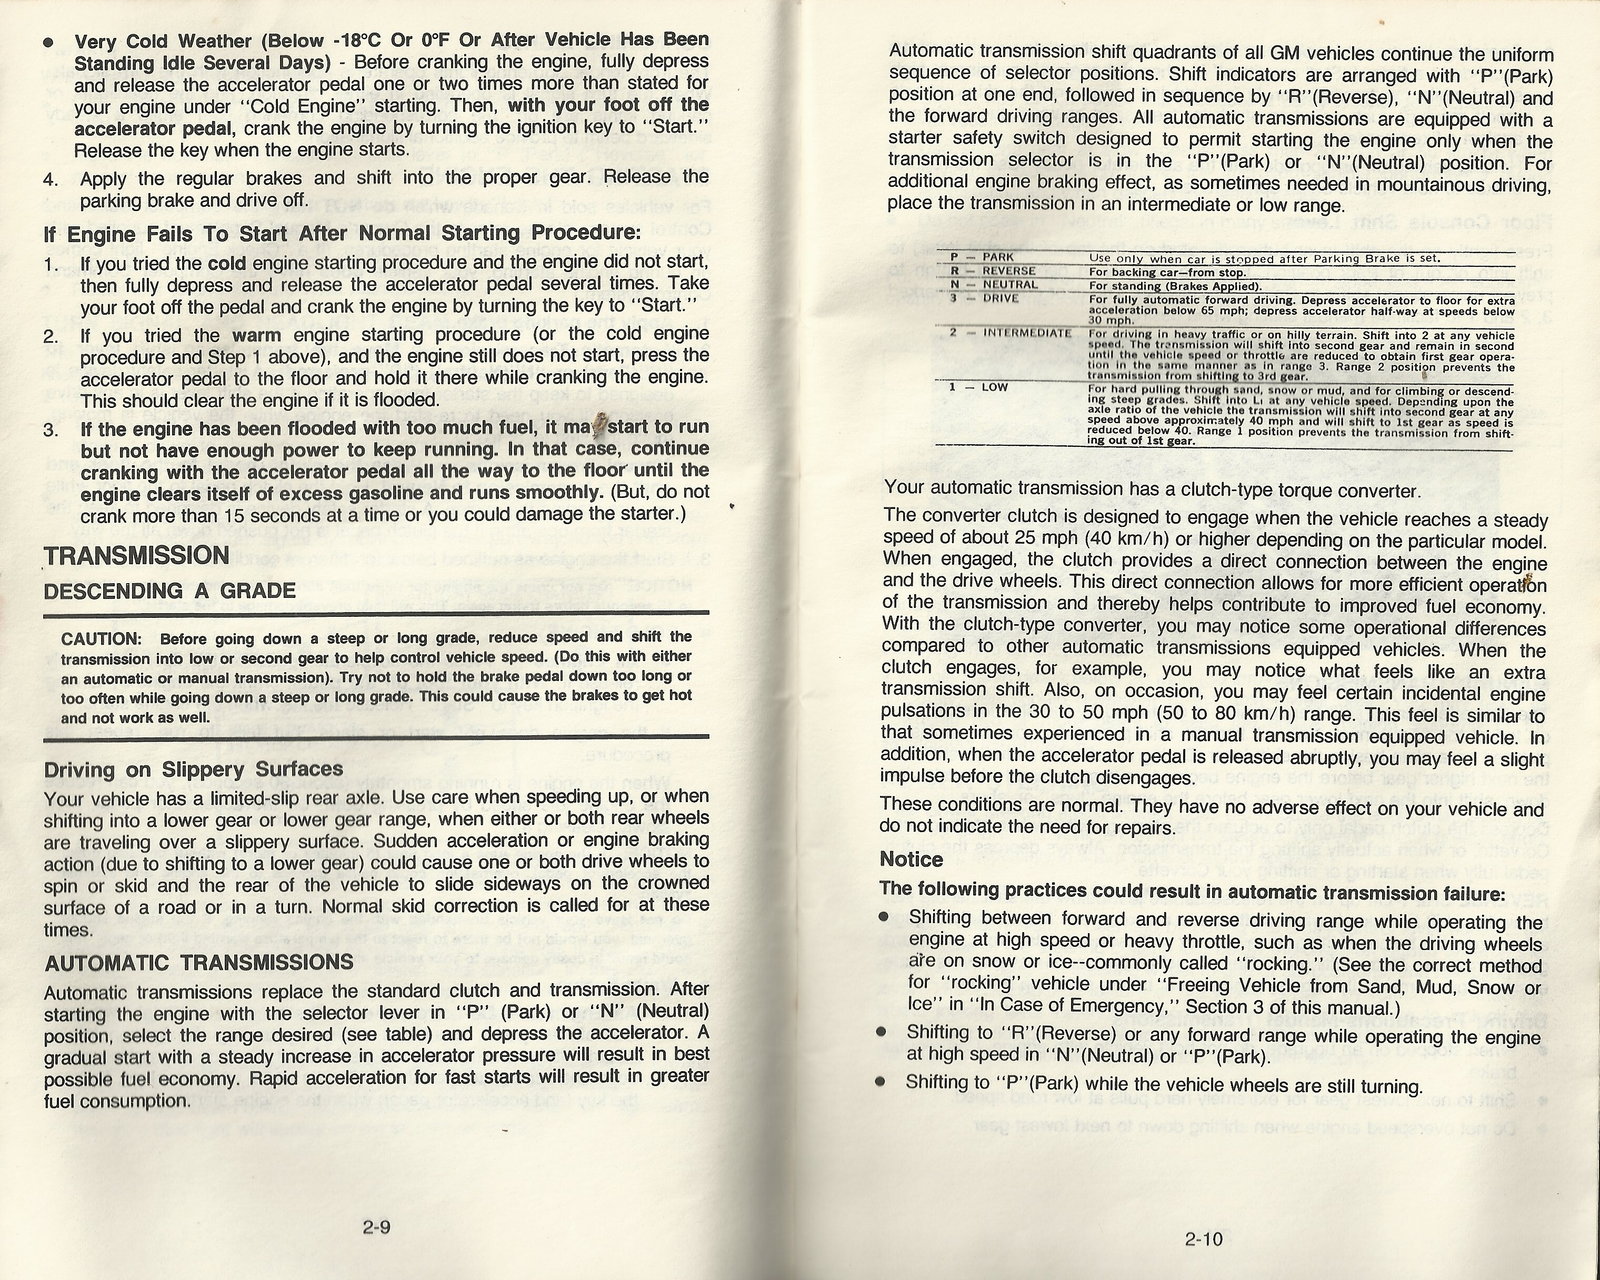 1981 Owner's Manual FREE!!! - CorvetteForum - Chevrolet Corvette Forum ...